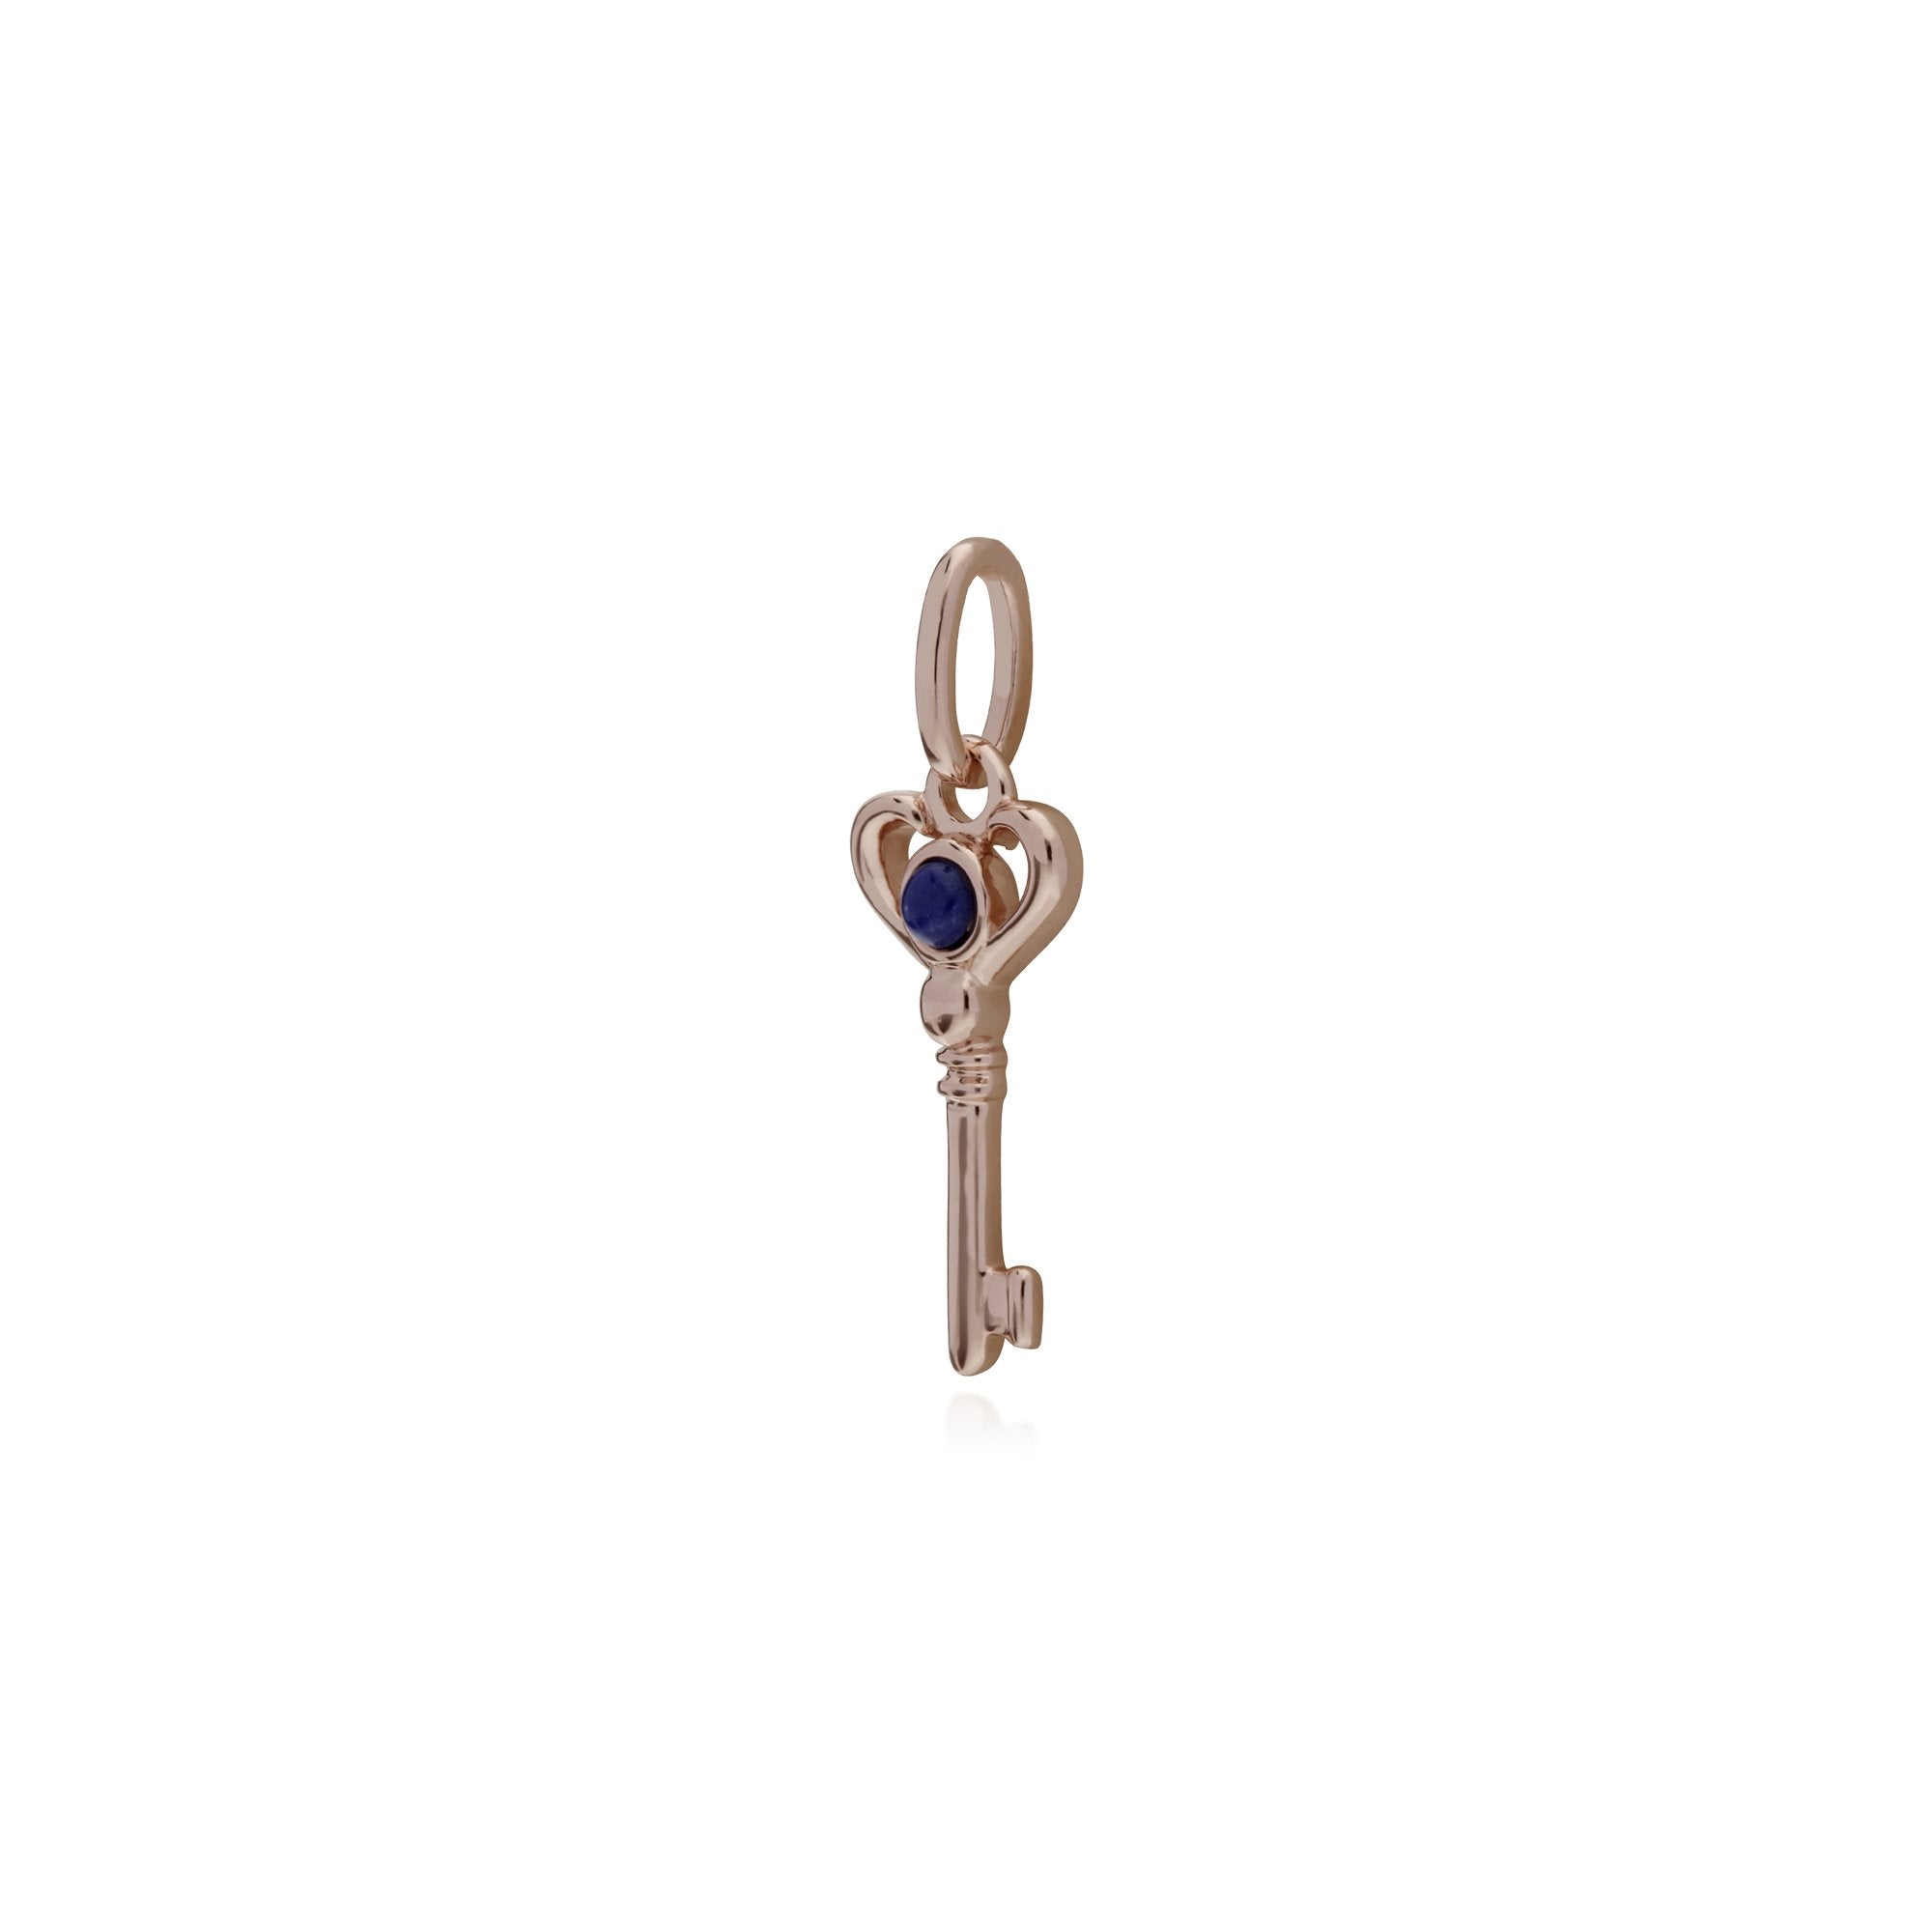 Gemondo Rose Gold Plated Sterling Silver Lapis Lazuli Small Key Charm